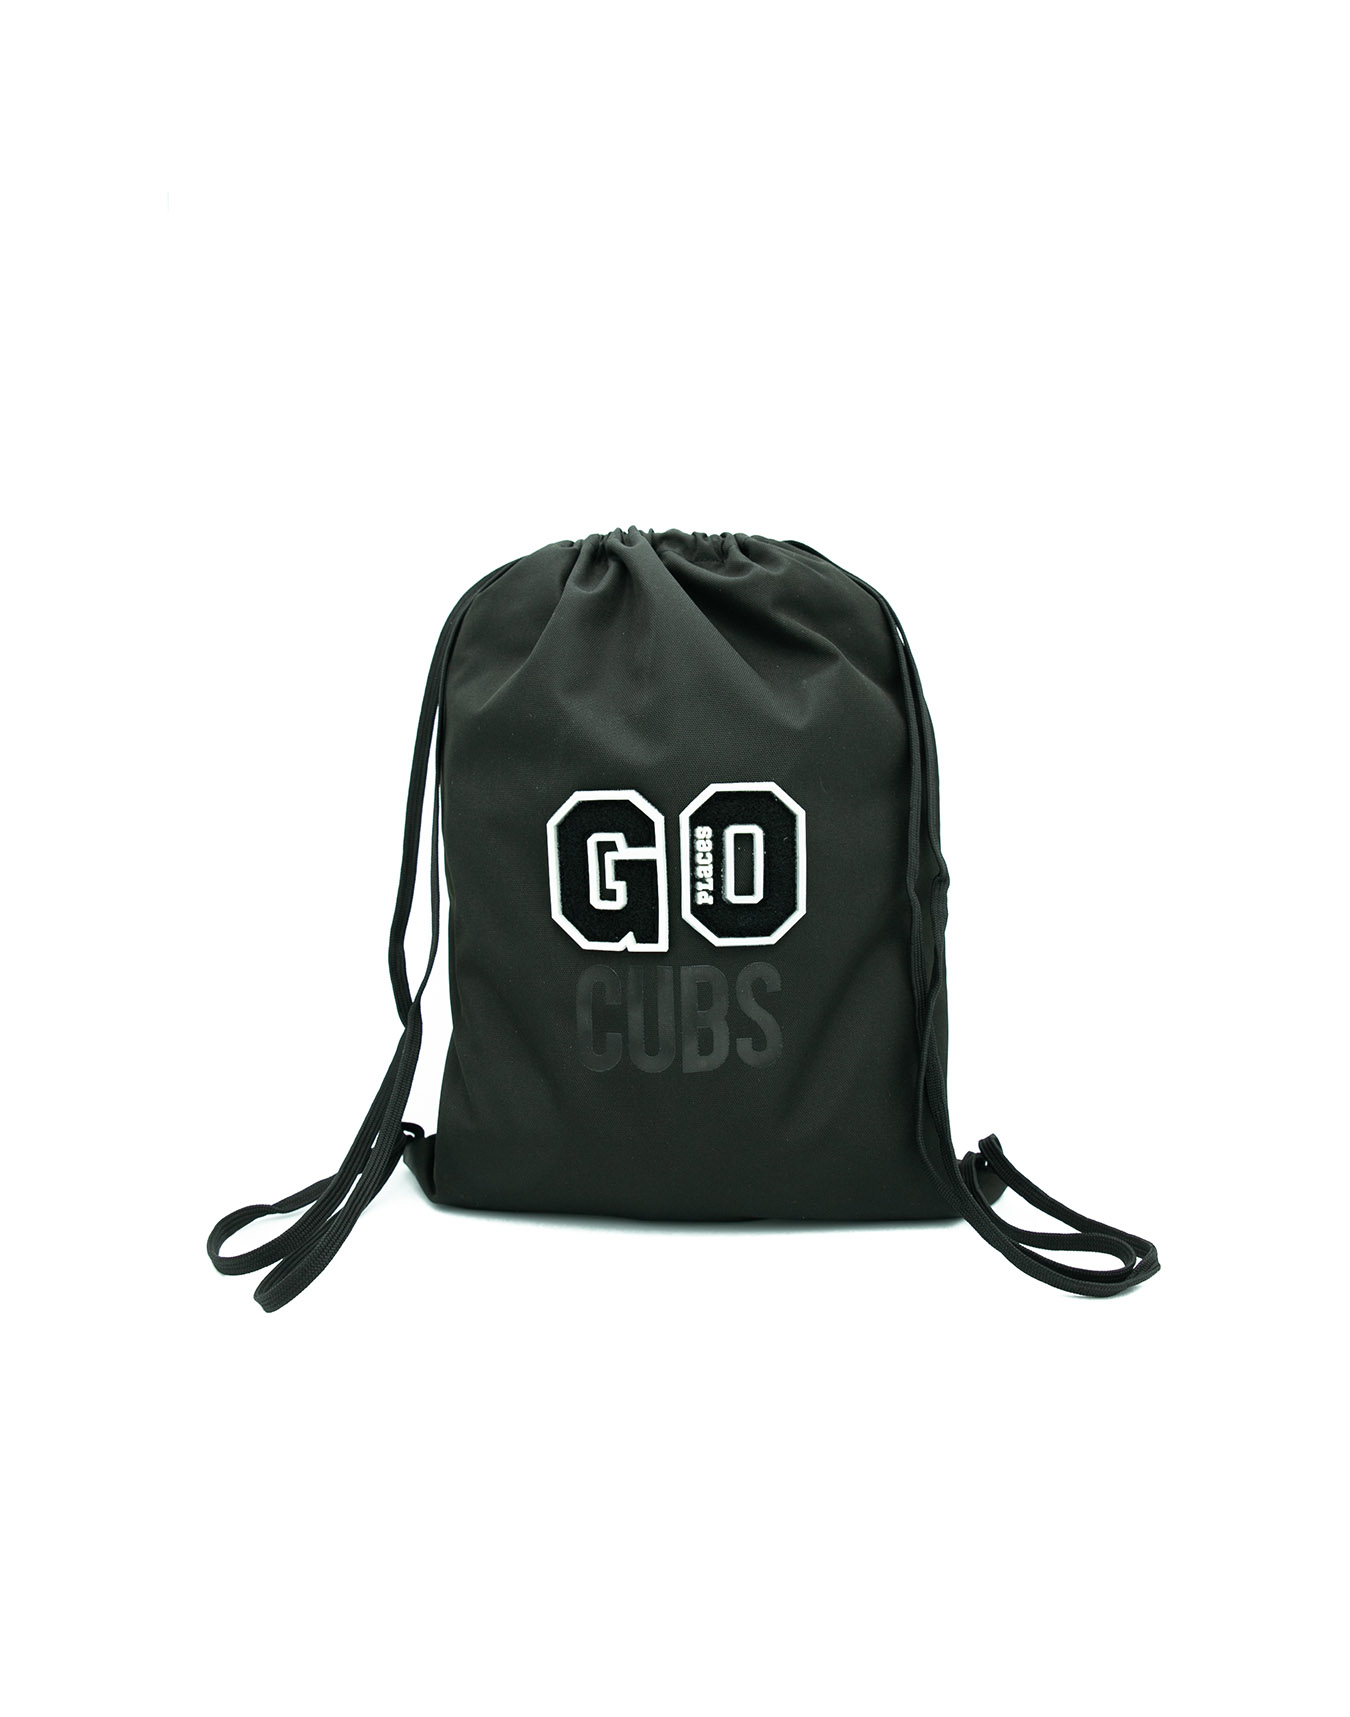 Go Black String Bag | CUBS | Go Places